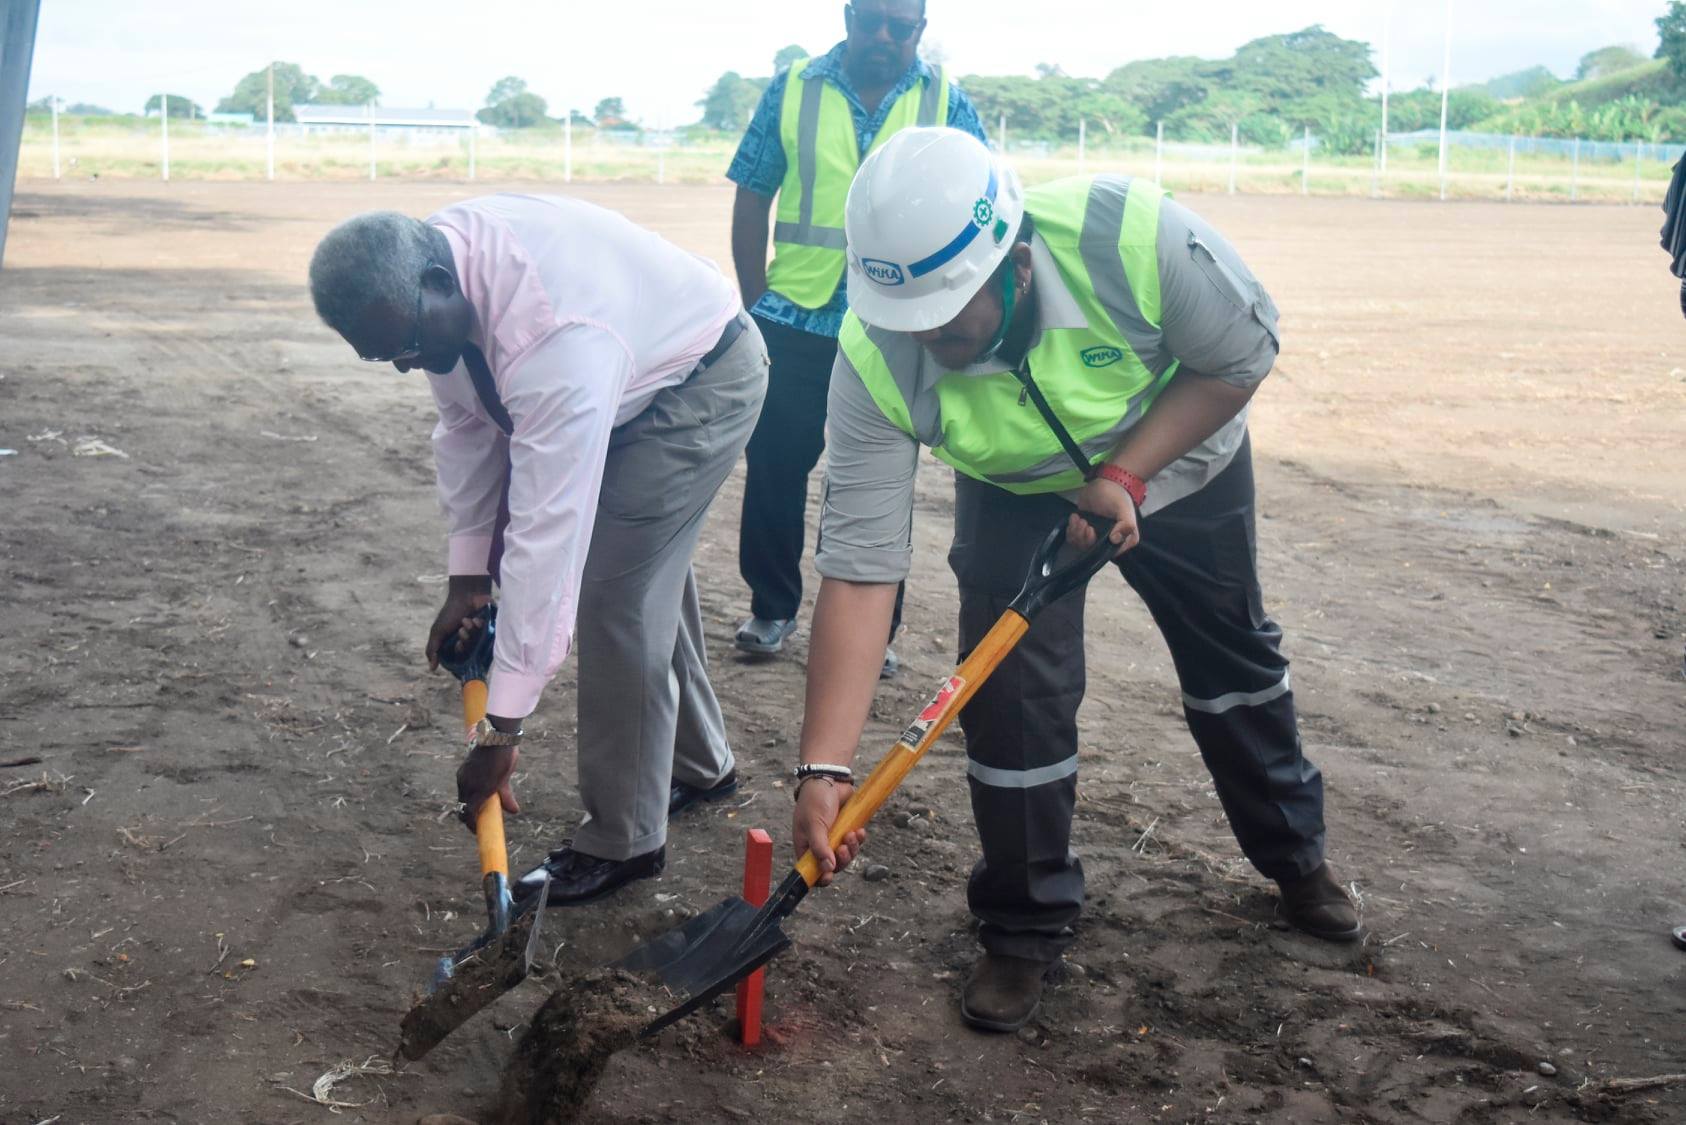 The Solomon Island's futsal facility dream to commence construction in 2021 